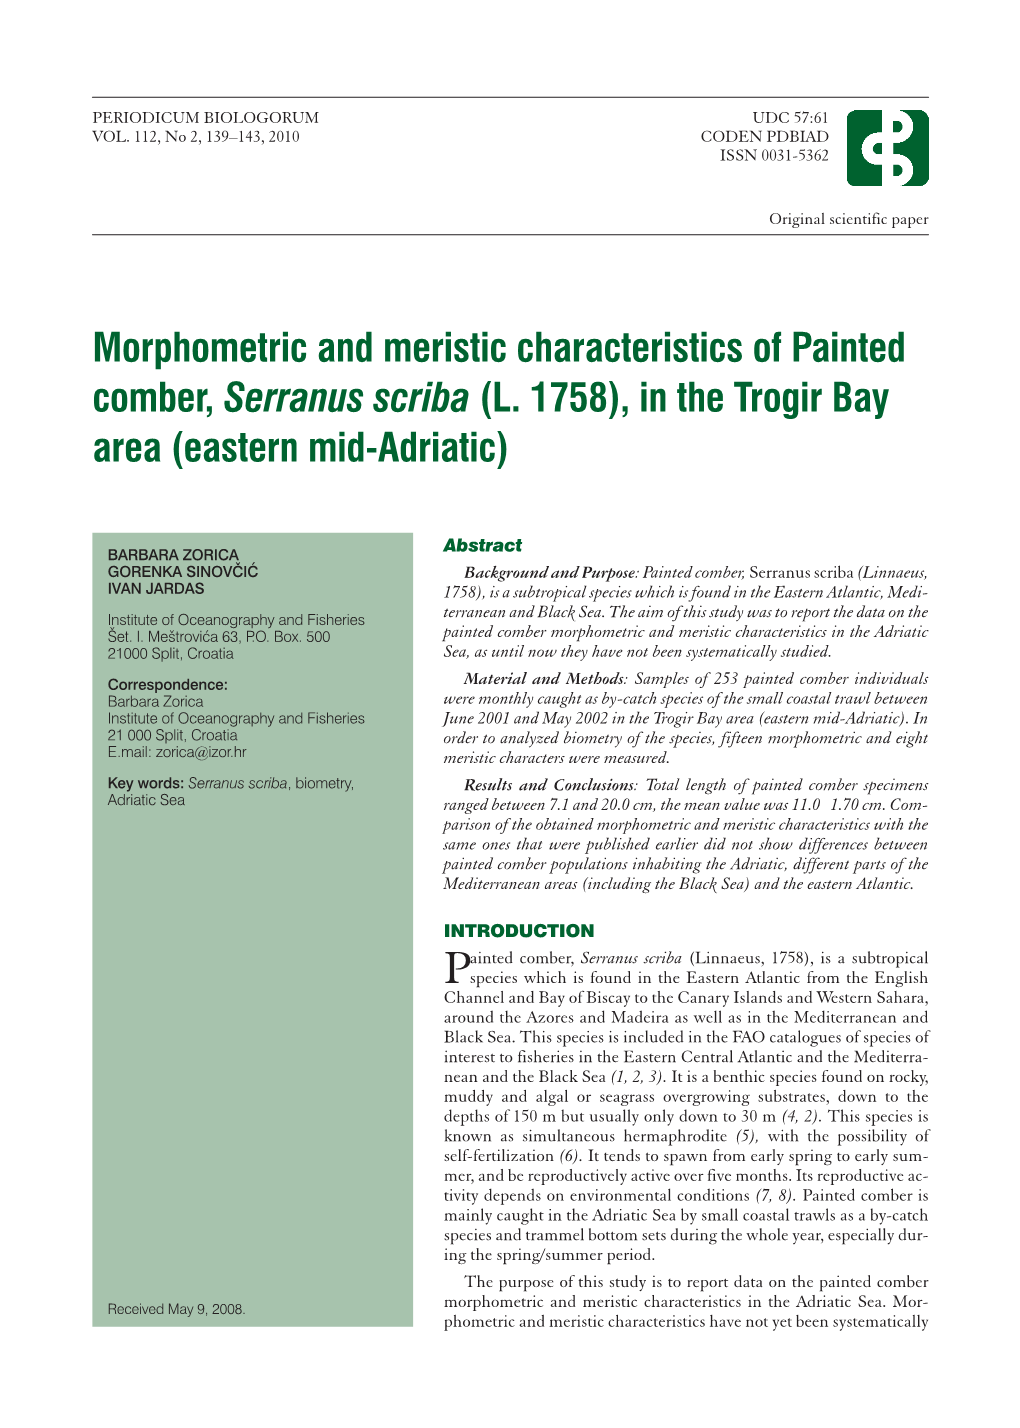 Morphometric and Meristic Characteristics of Painted Comber, Serranus Scriba (L